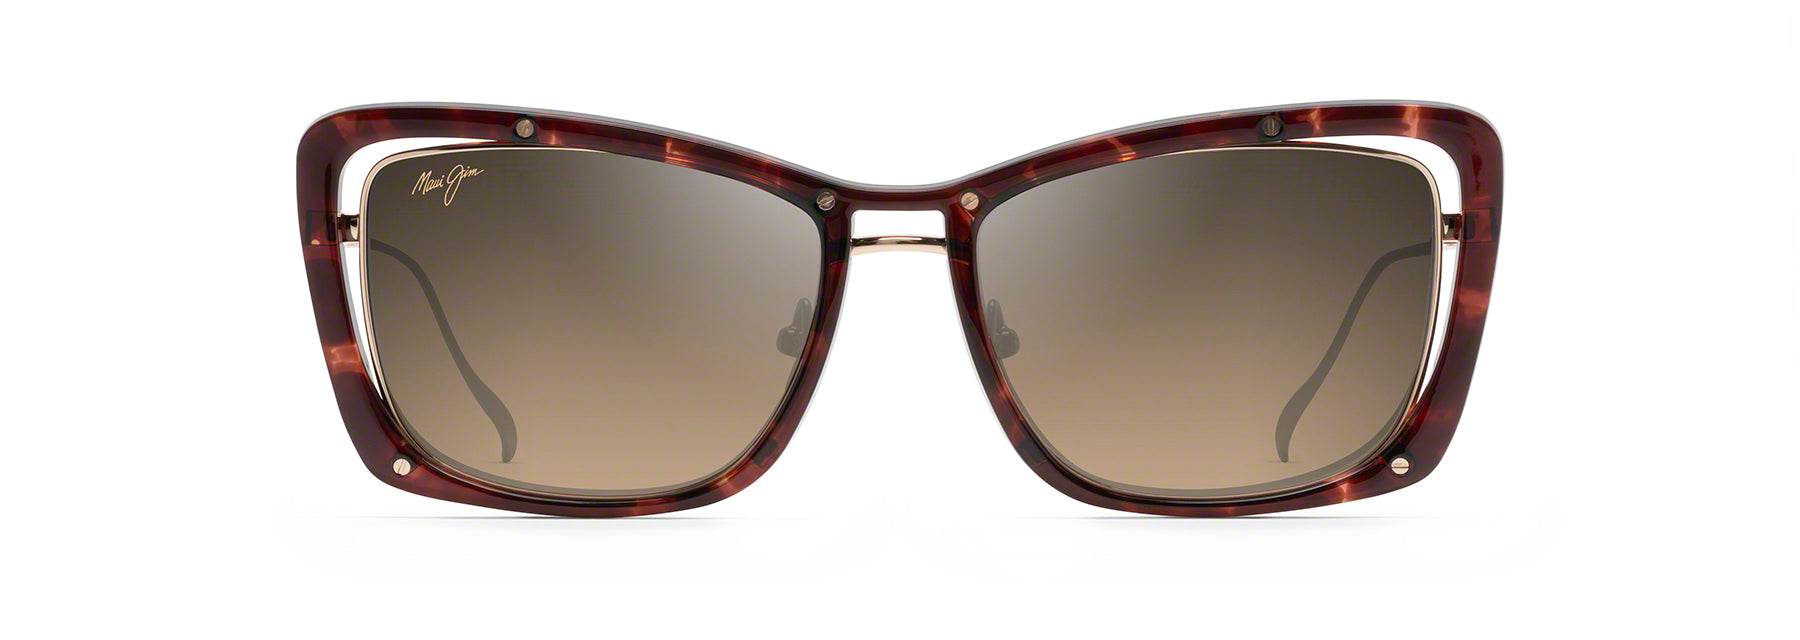 Maui Jim Adrift Sunglasses